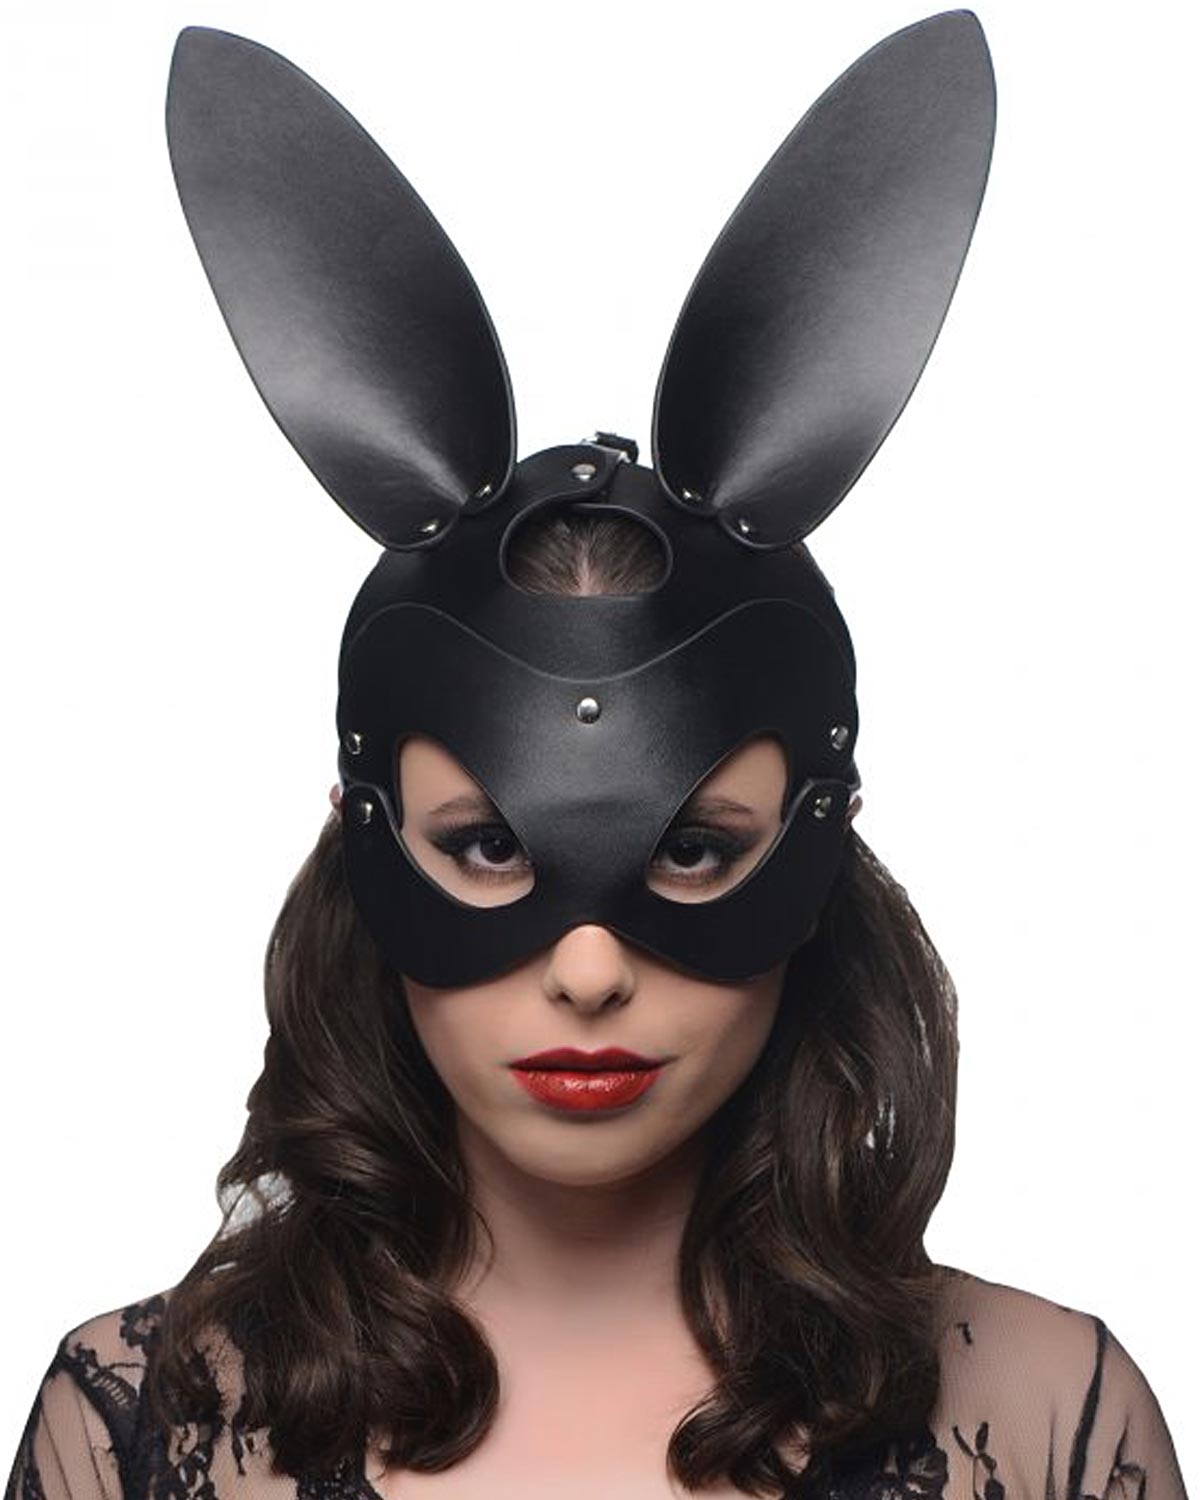 Master Series "Bad Bunny" Bunny Mask.